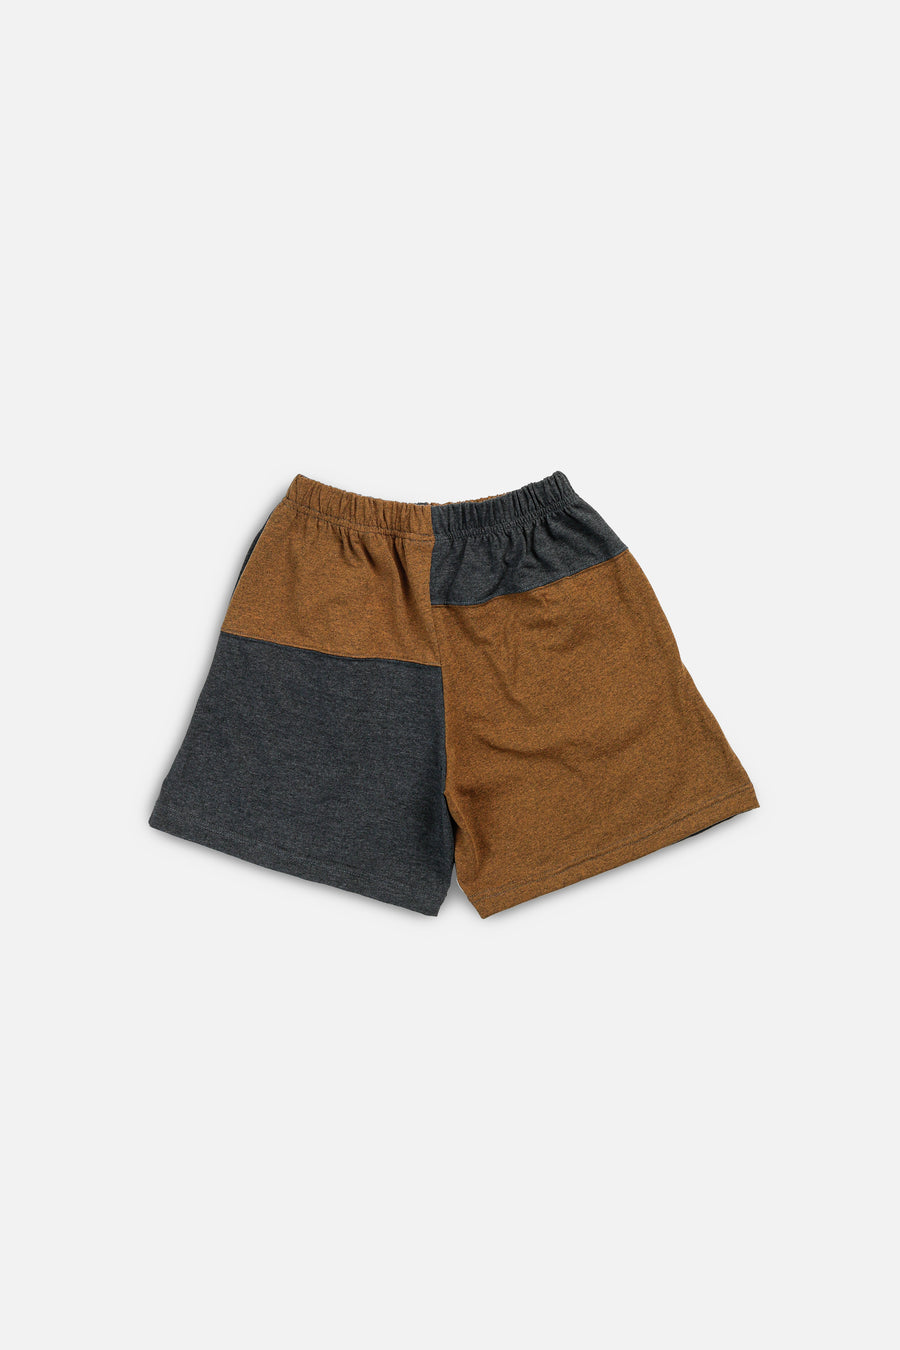 Unisex Rework Carhartt Patchwork Tee Shorts - XS